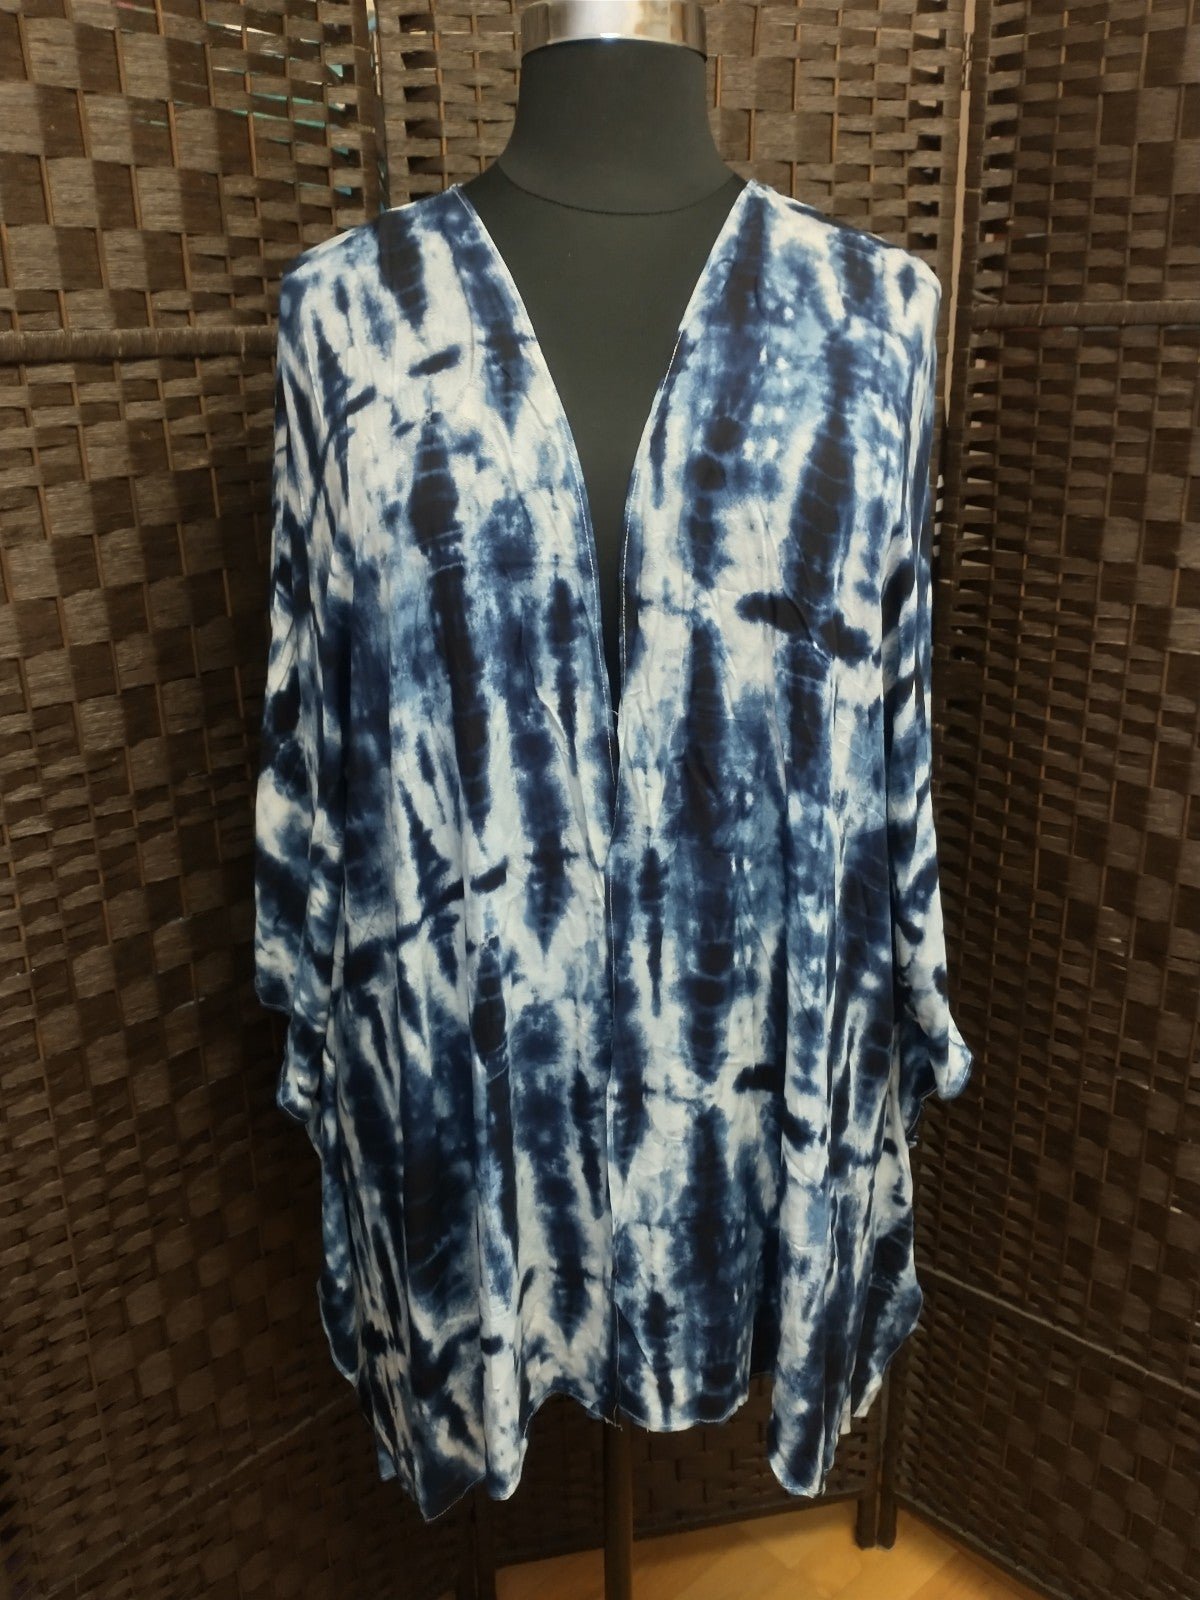 cheapest place to buy  One Size NWT Kimono Blue/Navy/White Tie Dye KjAdS6Ly1 Wholesale